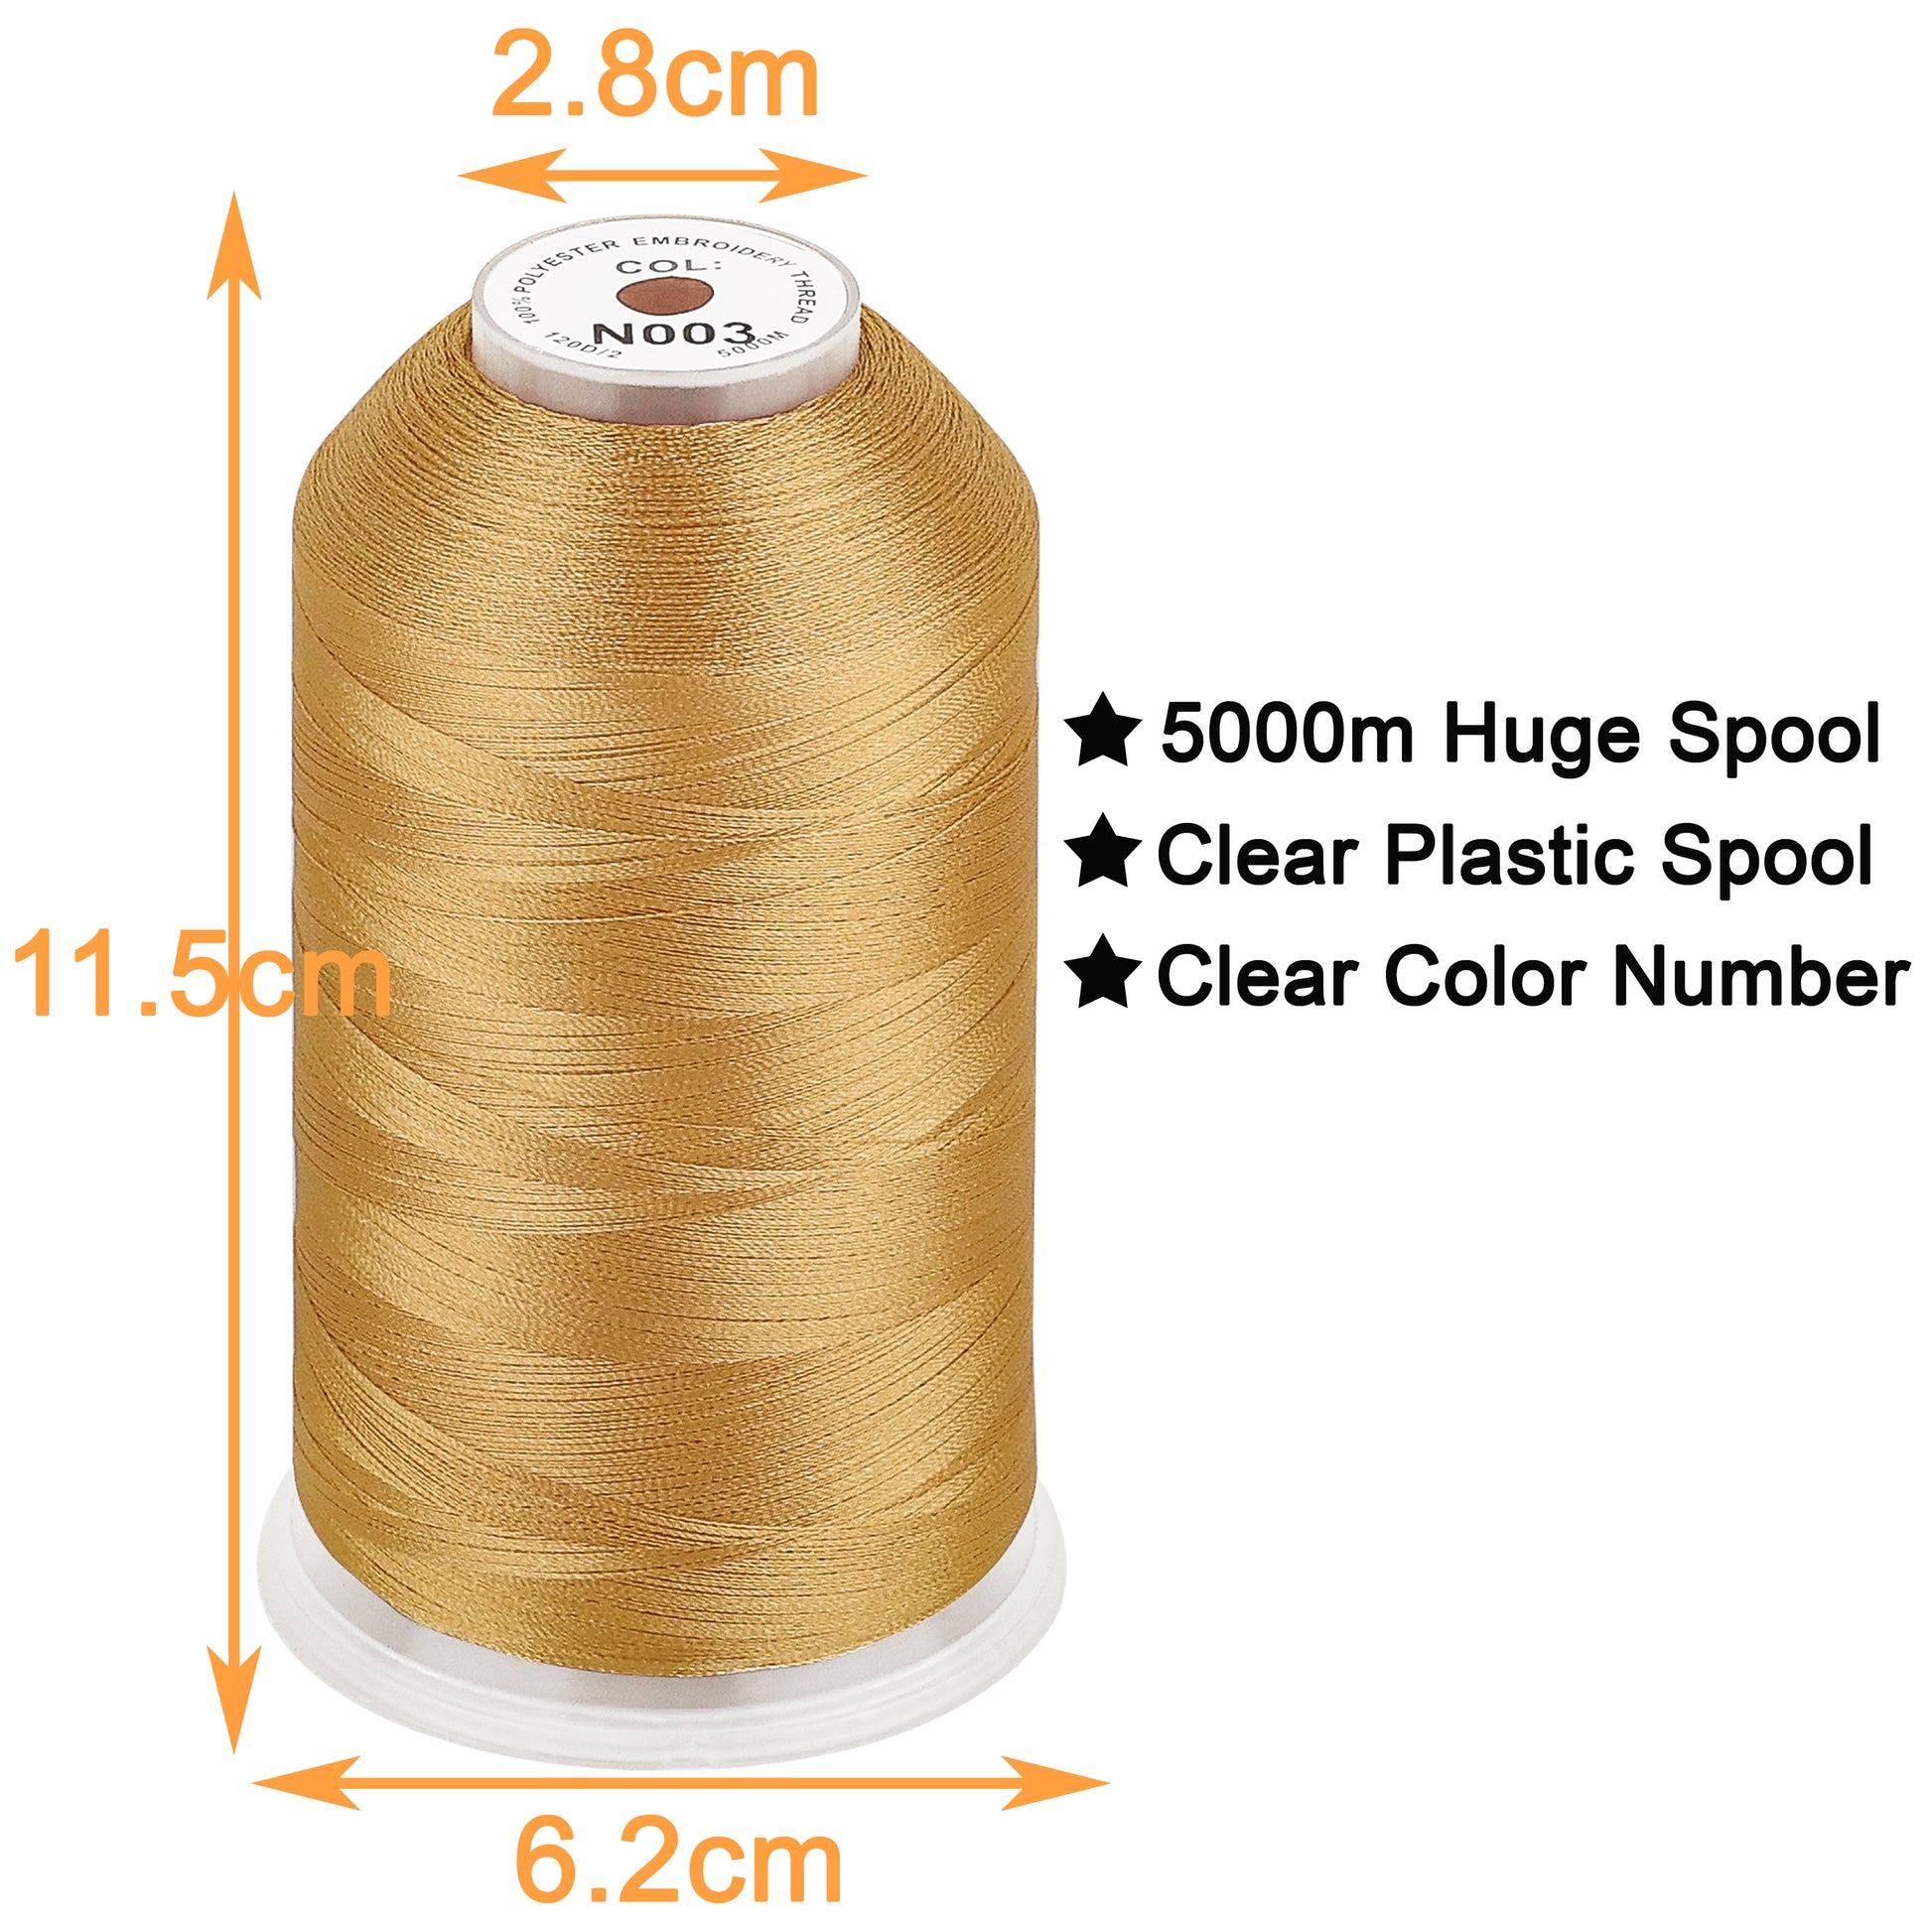 New brothread 24 Basic Colors Multi-Purpose 100% Mercerized Cotton Thr